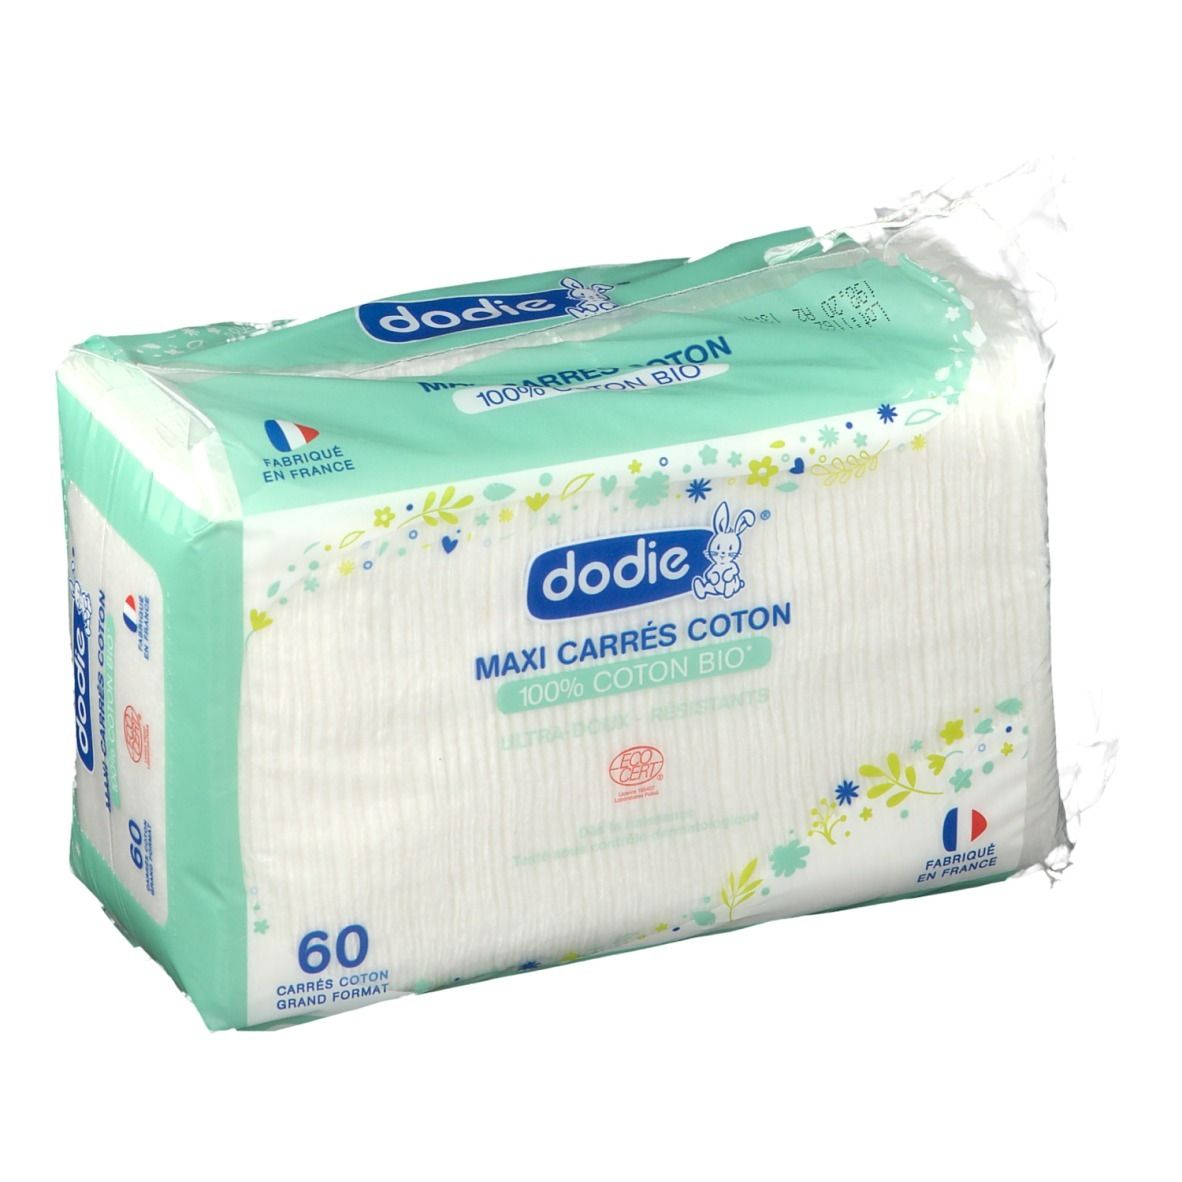 Dodie Maxi carres coton 3en1 60pcs 